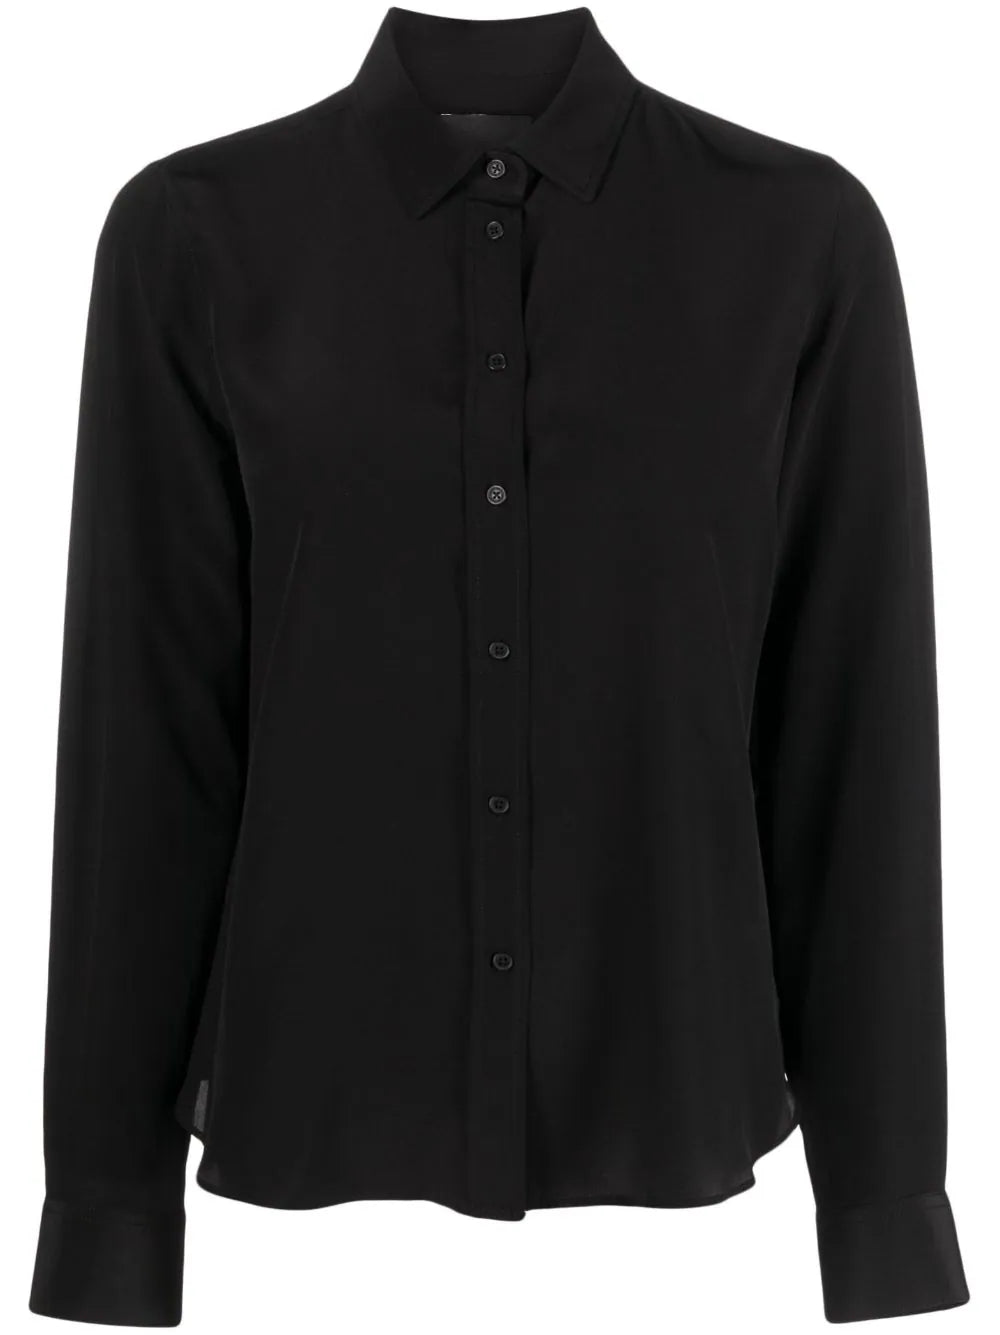 Gaia Slim Shirt in Black